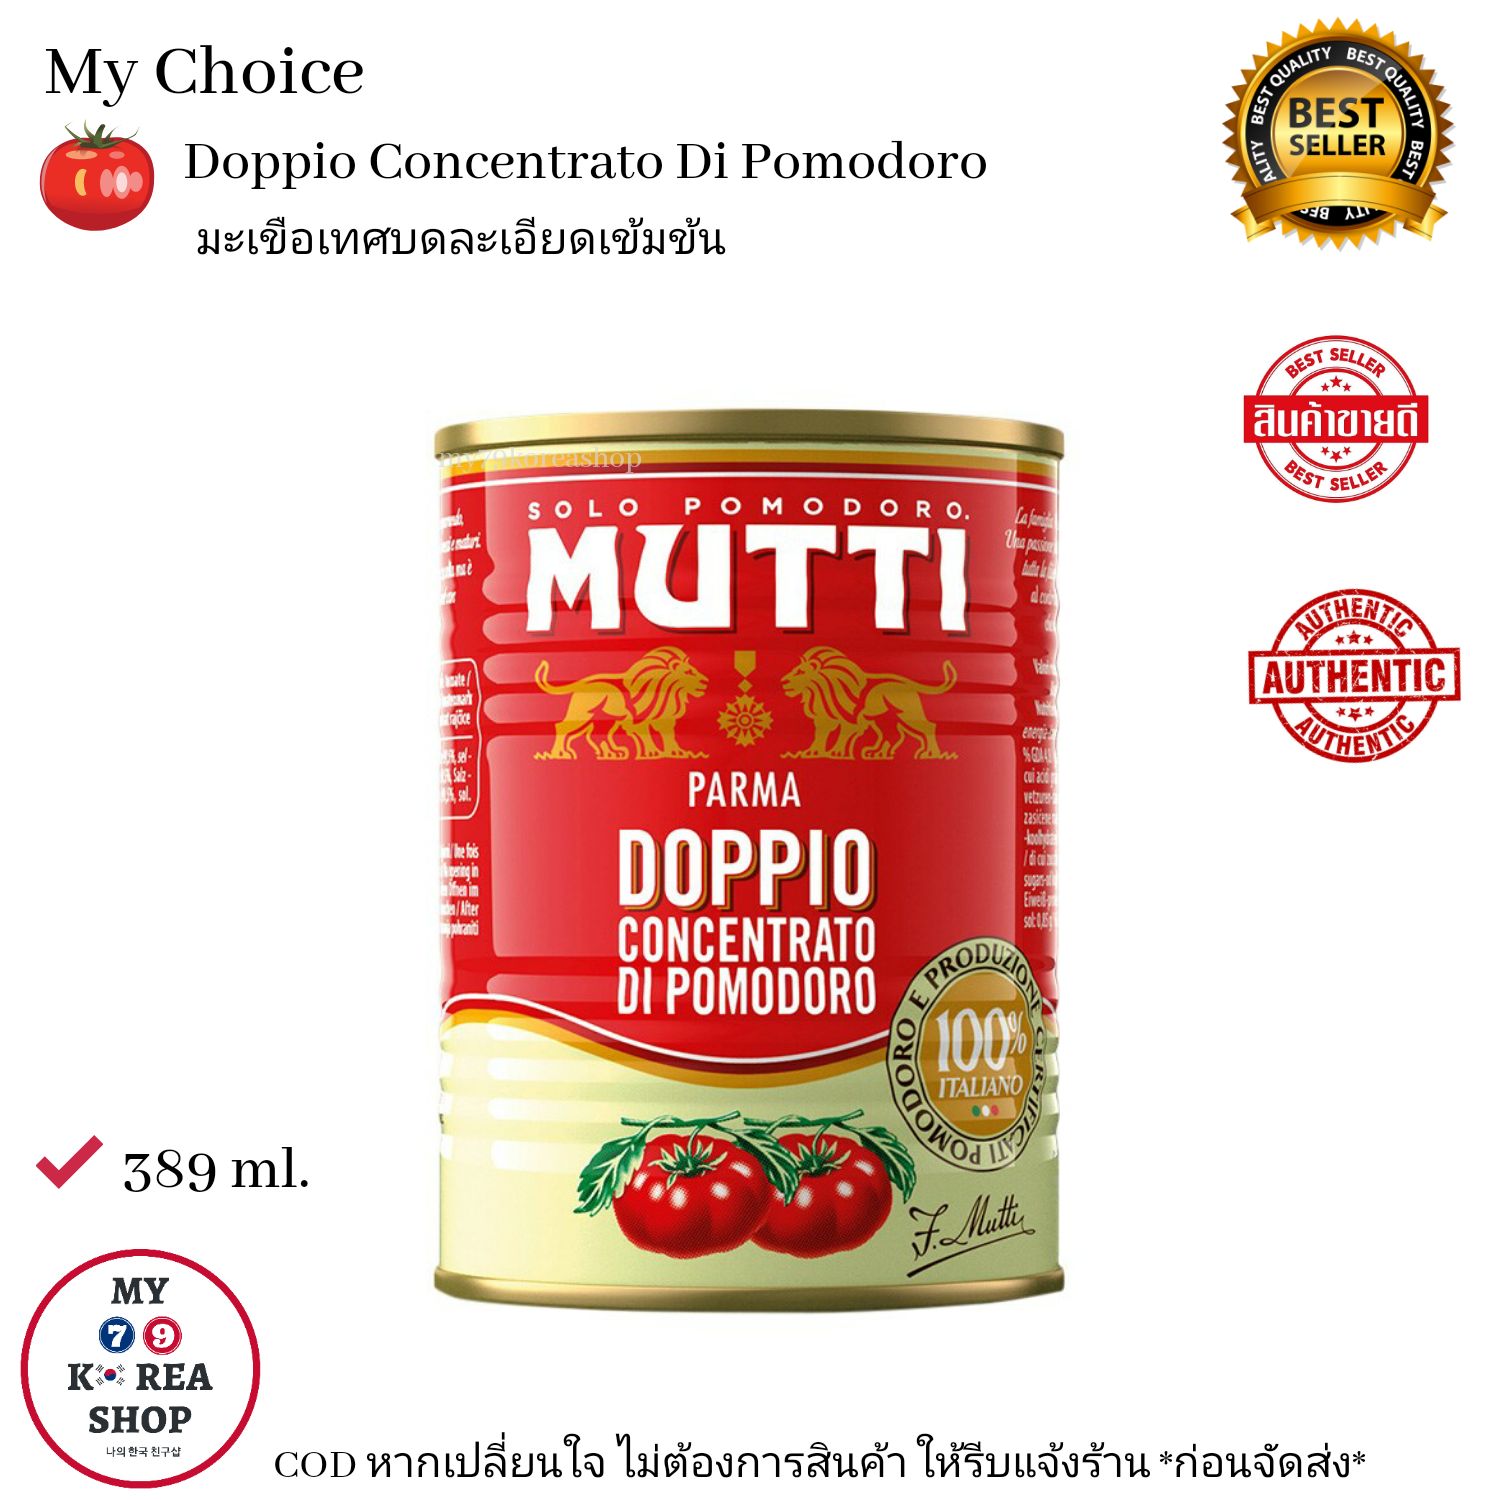 Mutti Doppio Concentrato Di Pomodoro 389 ml. มะเขือเทศบดละเอียดเข้มข้น